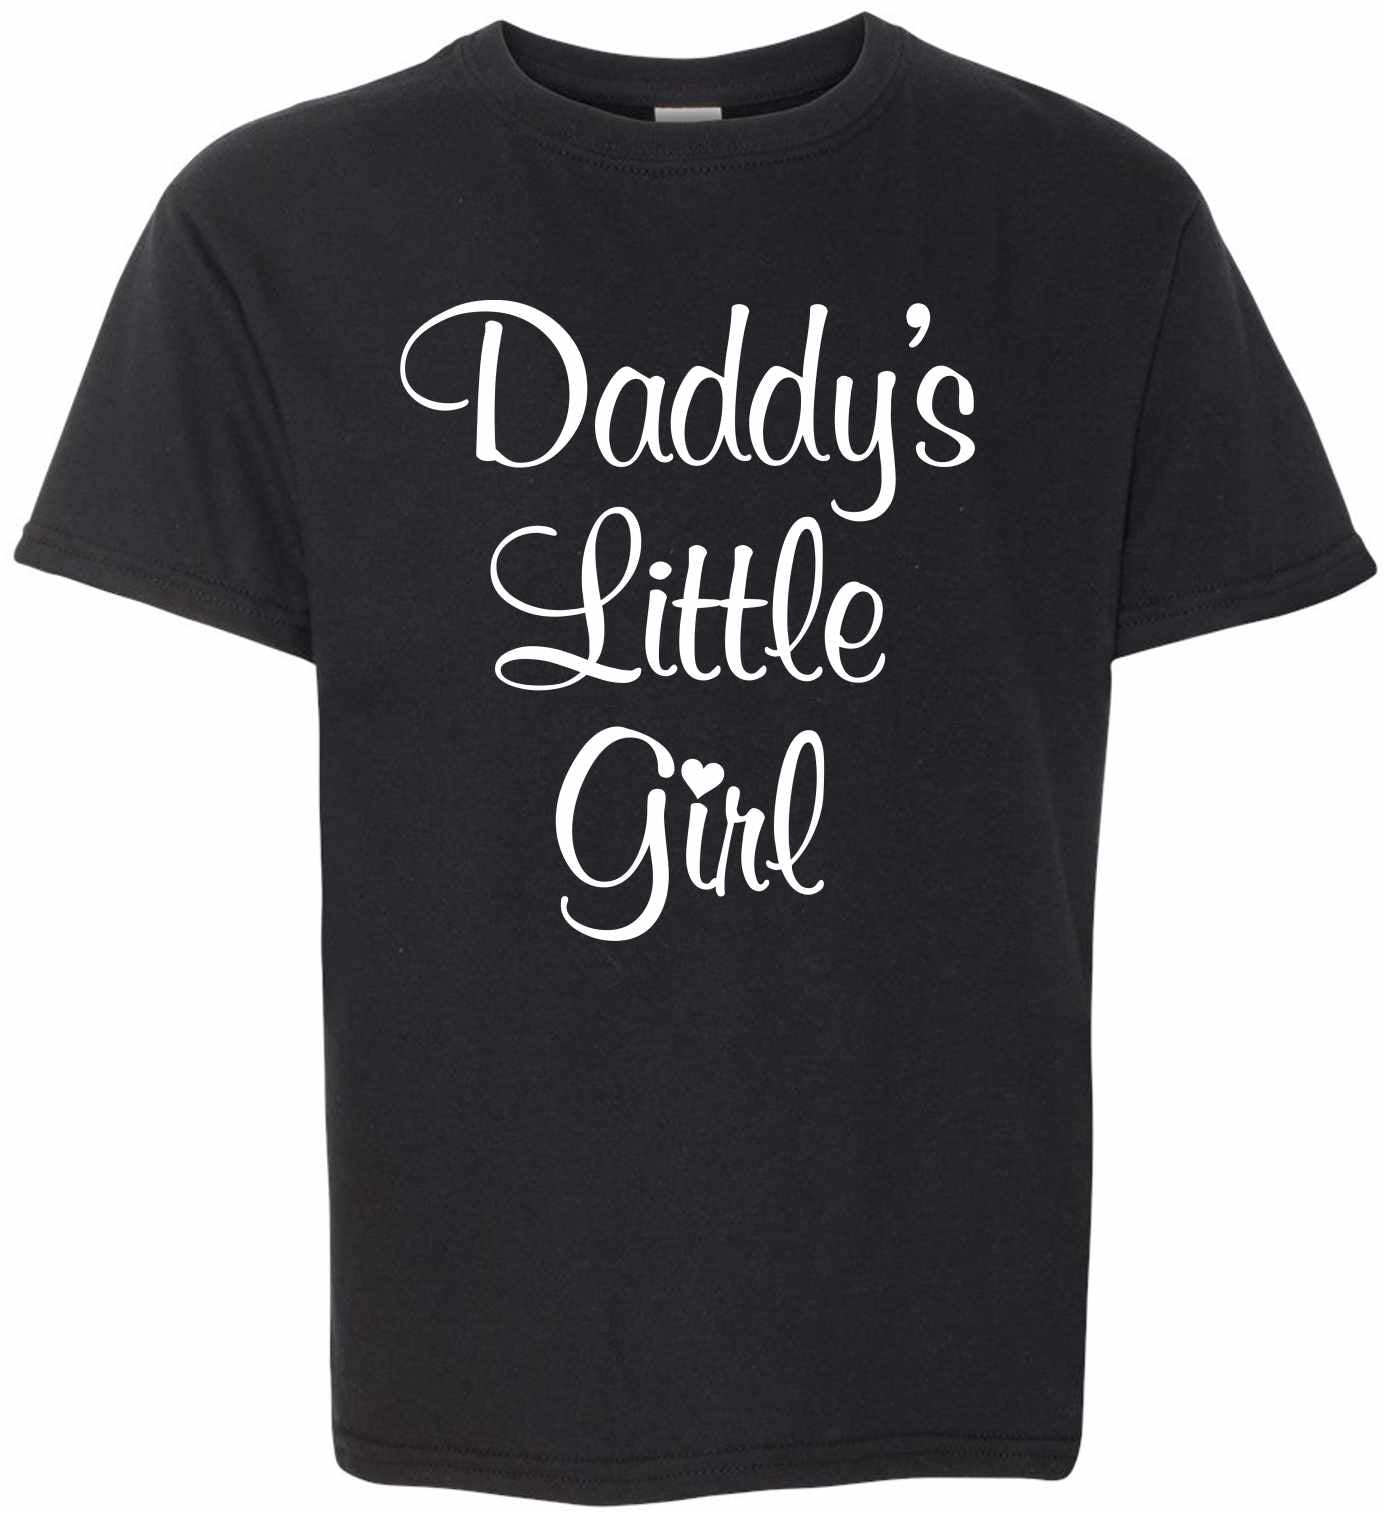 Daddy's Little Girl on Kids T-Shirt (#1294-201)